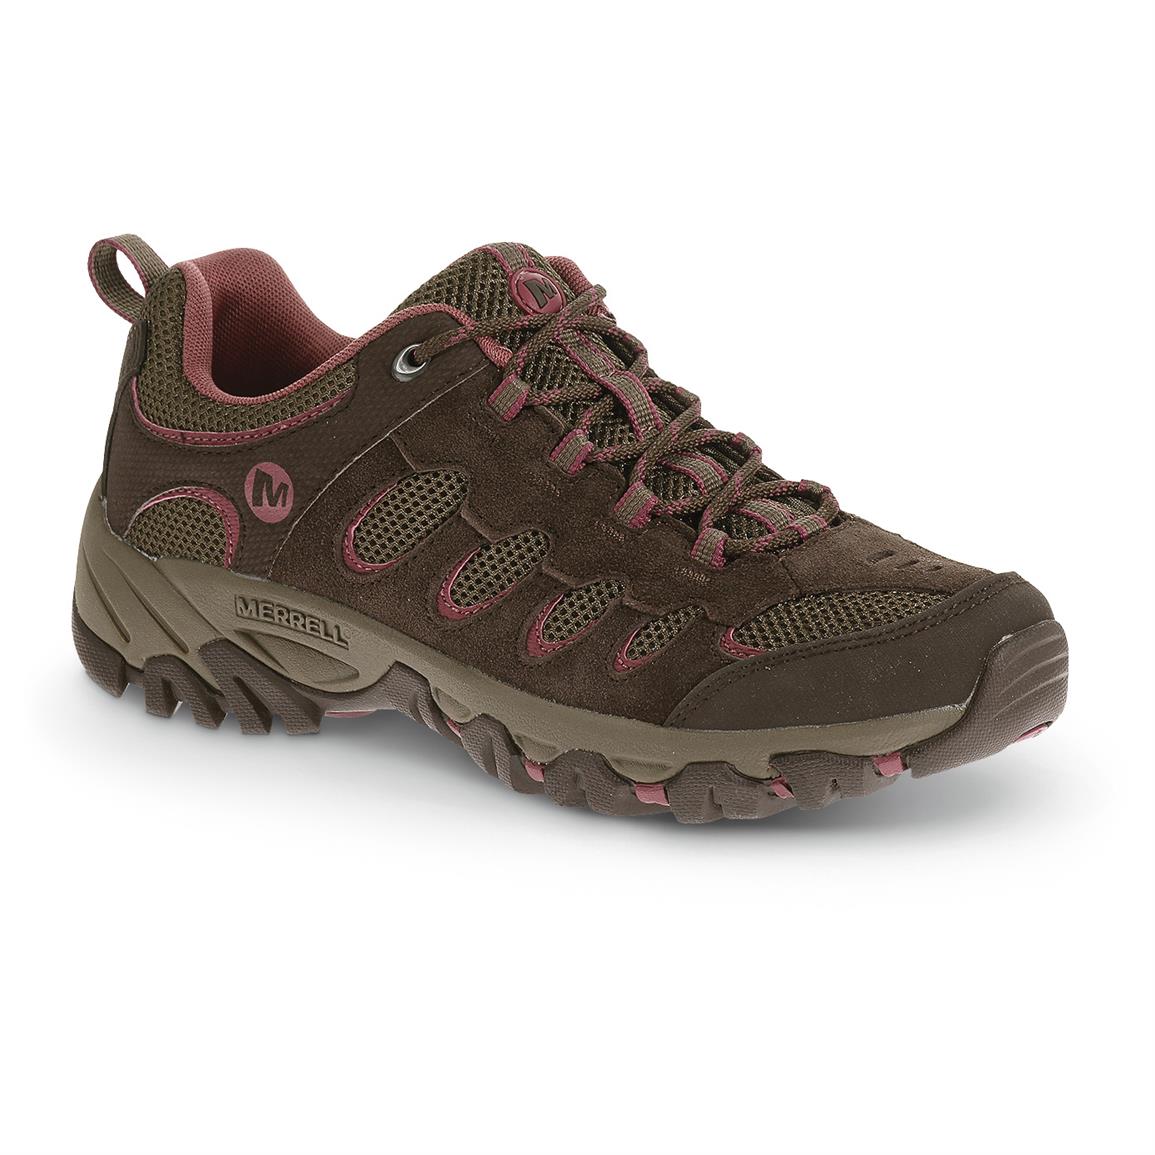 Merrell Women's Ridgepass Hiking Shoes - 640067, Hiking Boots & Shoes ...